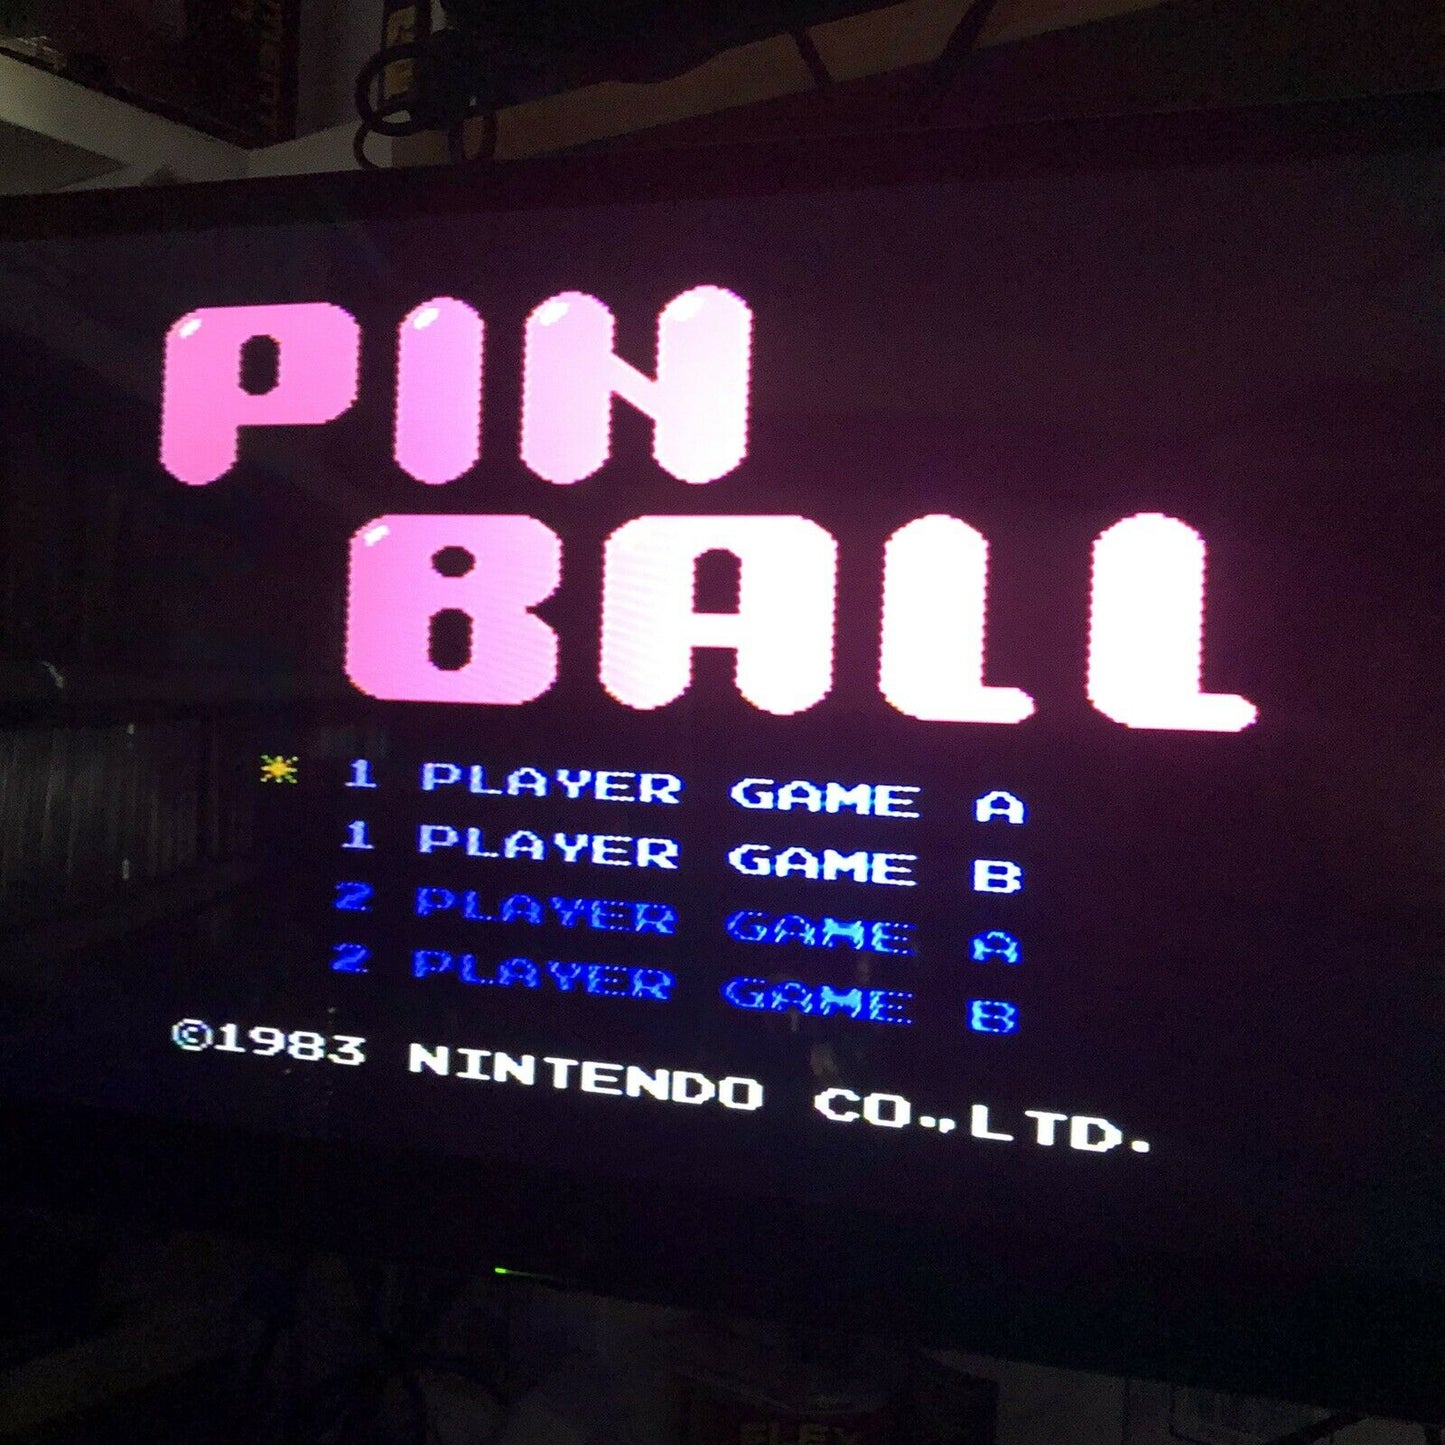 NES - Pinball Nintendo Entertainment System 1985 Complete No Styrofoam